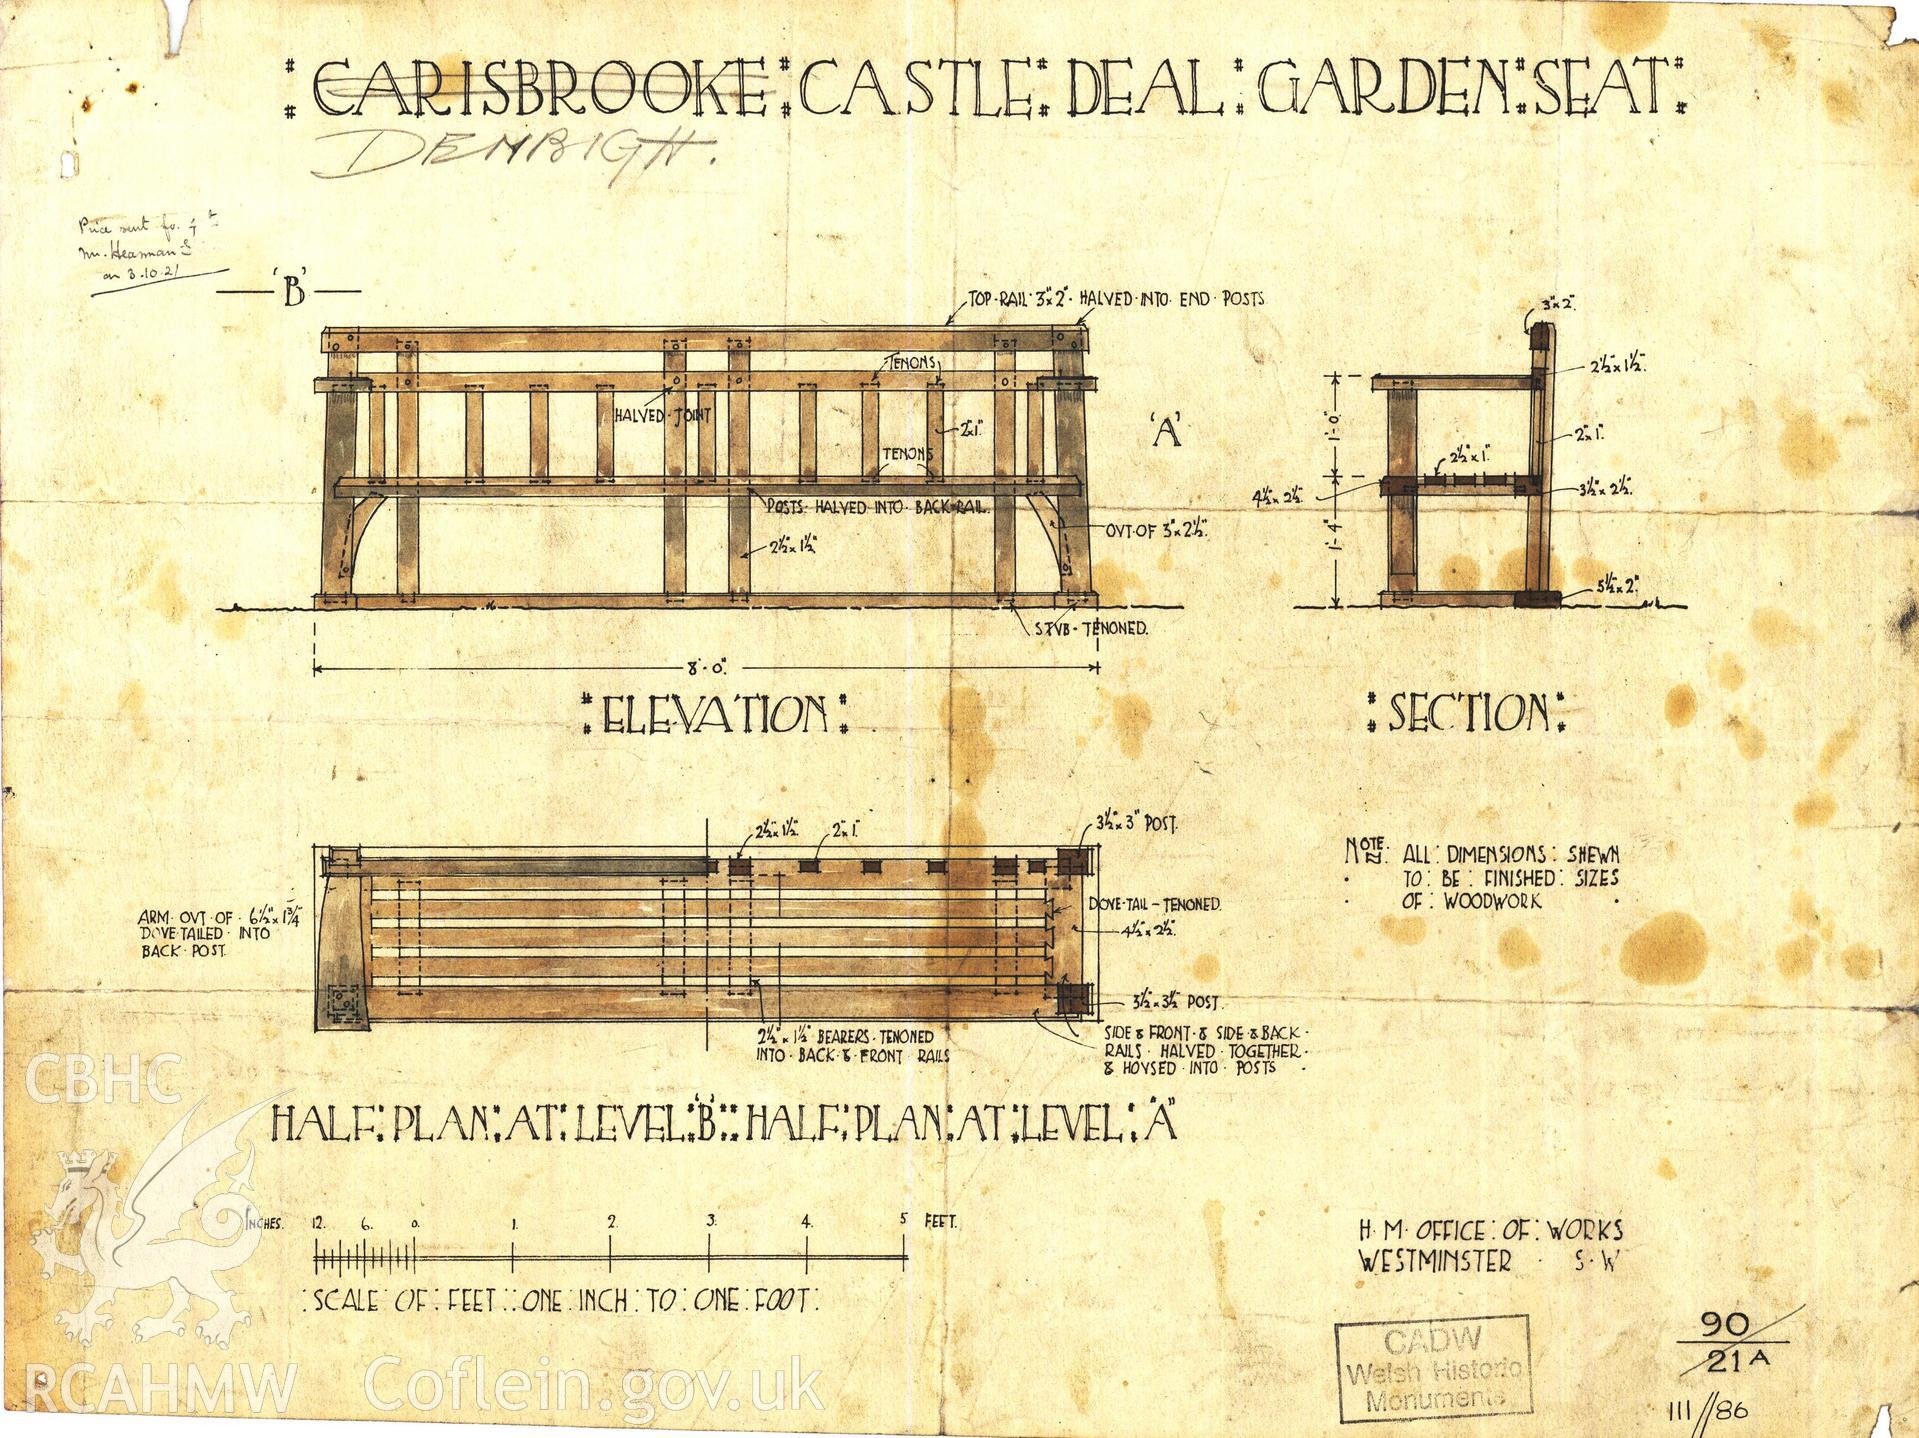 Cadw guardianship monument drawing of Denbigh Castle. Plan for Garden seat. Cadw Ref. No:111//86. Scale 1:12.